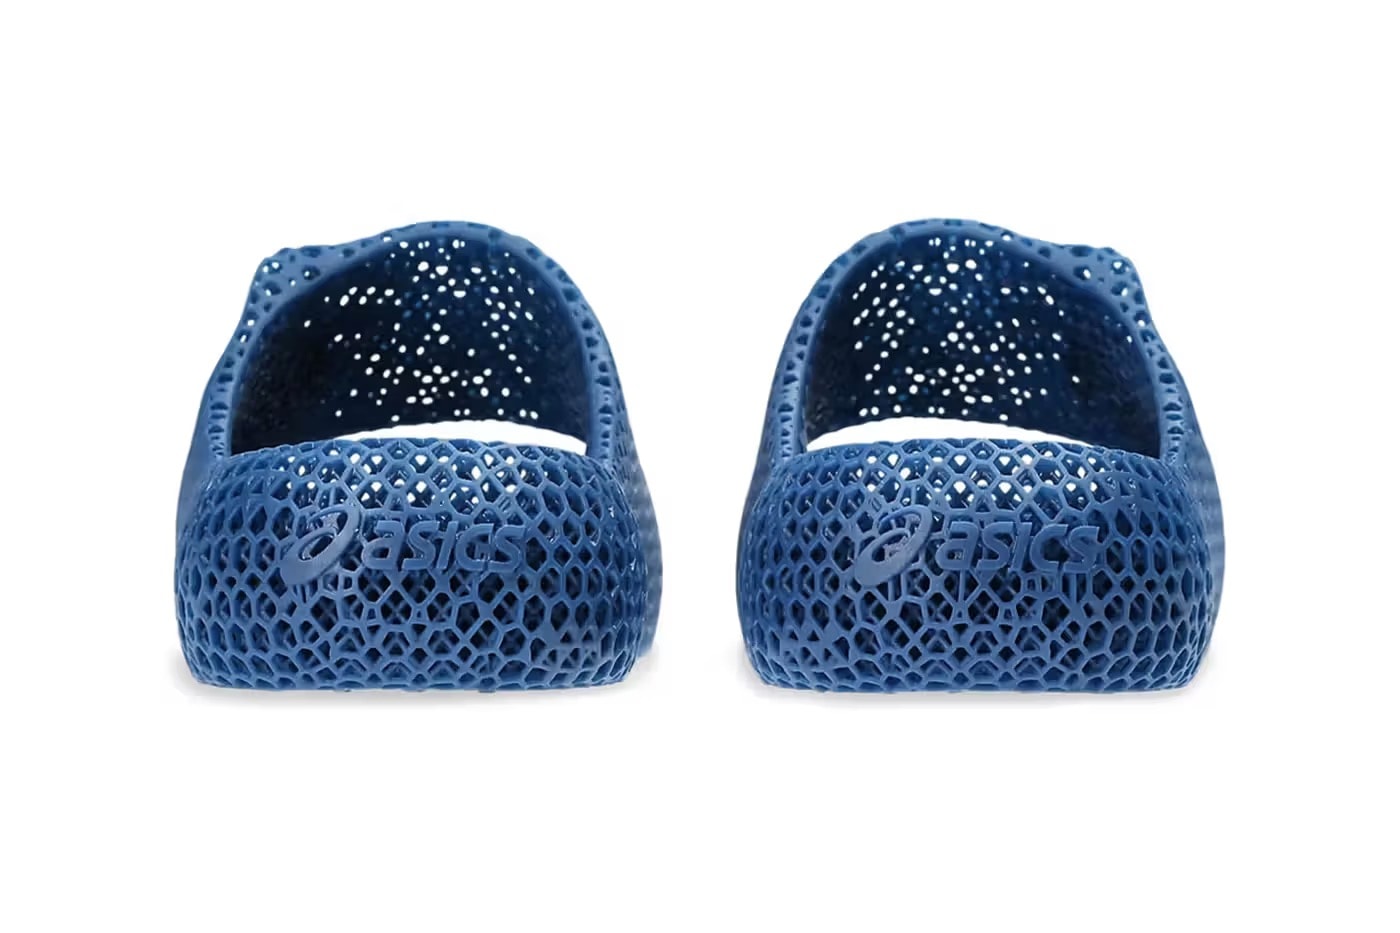 ASICS 人氣立體拖鞋 ACTIBREEZE 3D 最新配色「Mako Blue」正式登場